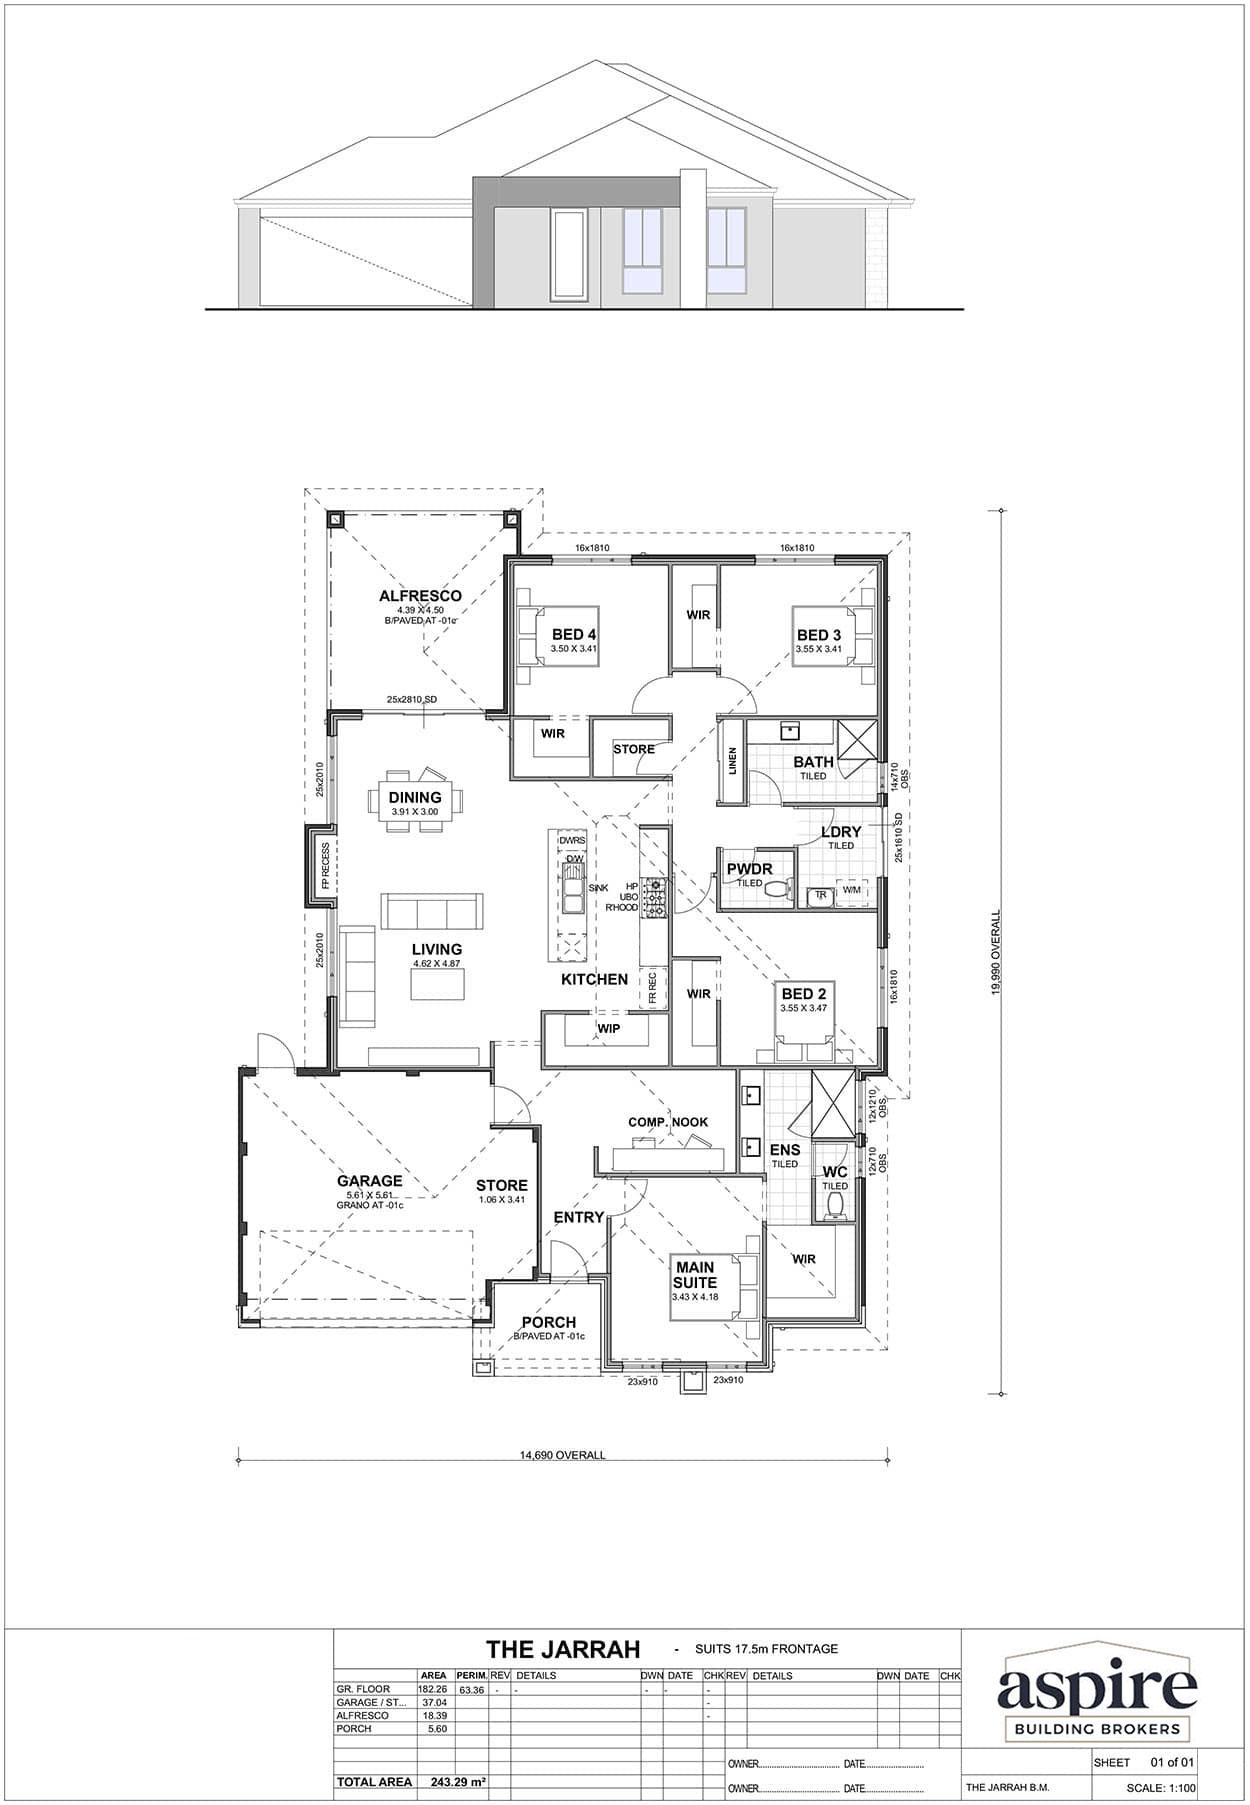 The Jarrah Floor Plan - Perth New Build Home Designs. 4 Bedrooms and 17.5m Block Width. Aspire Building Brokers